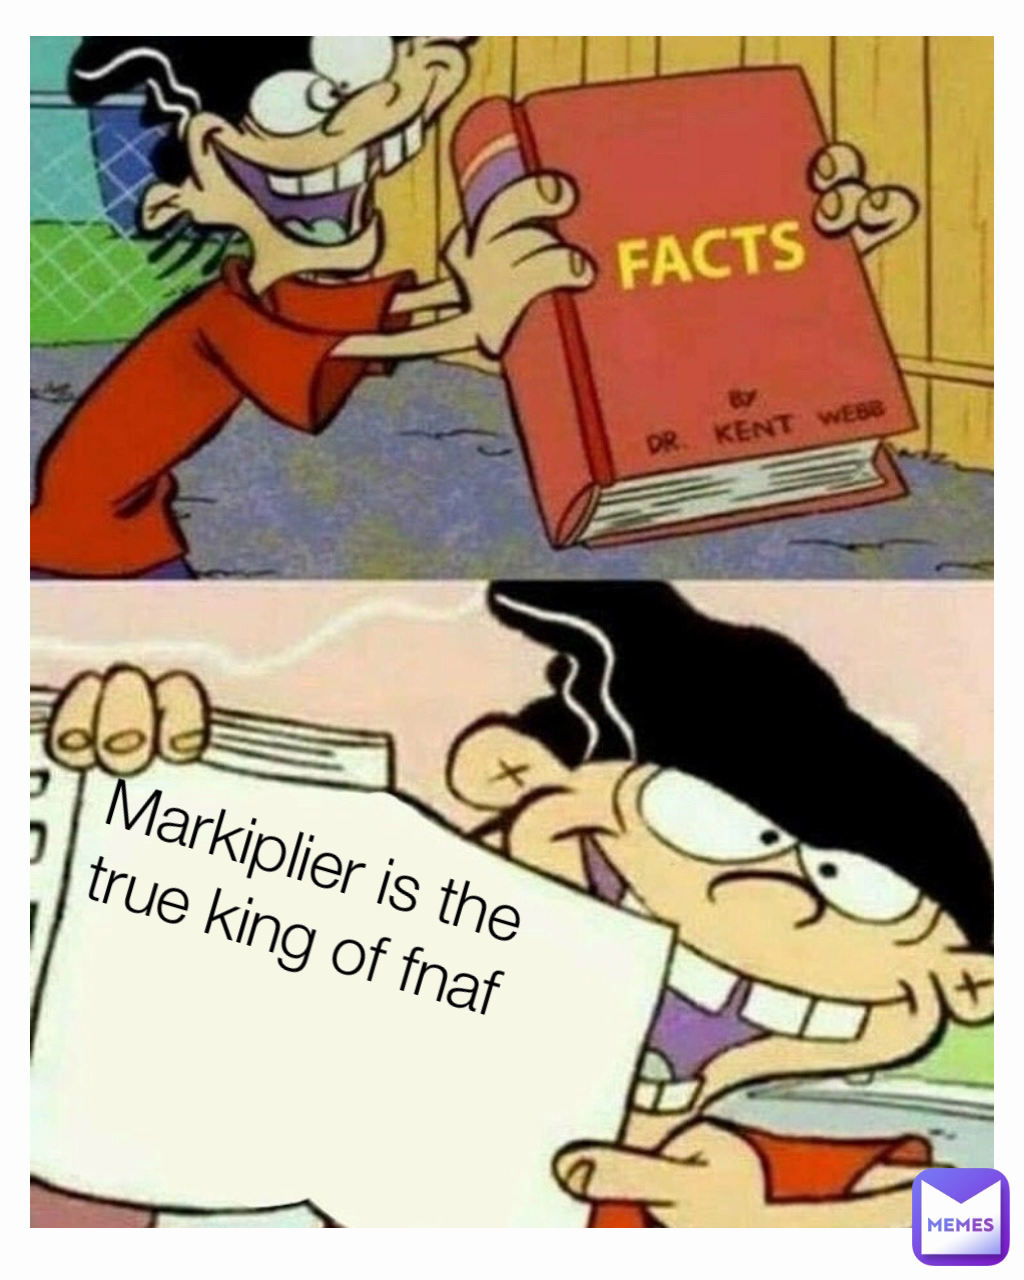 Markiplier is the true king of fnaf